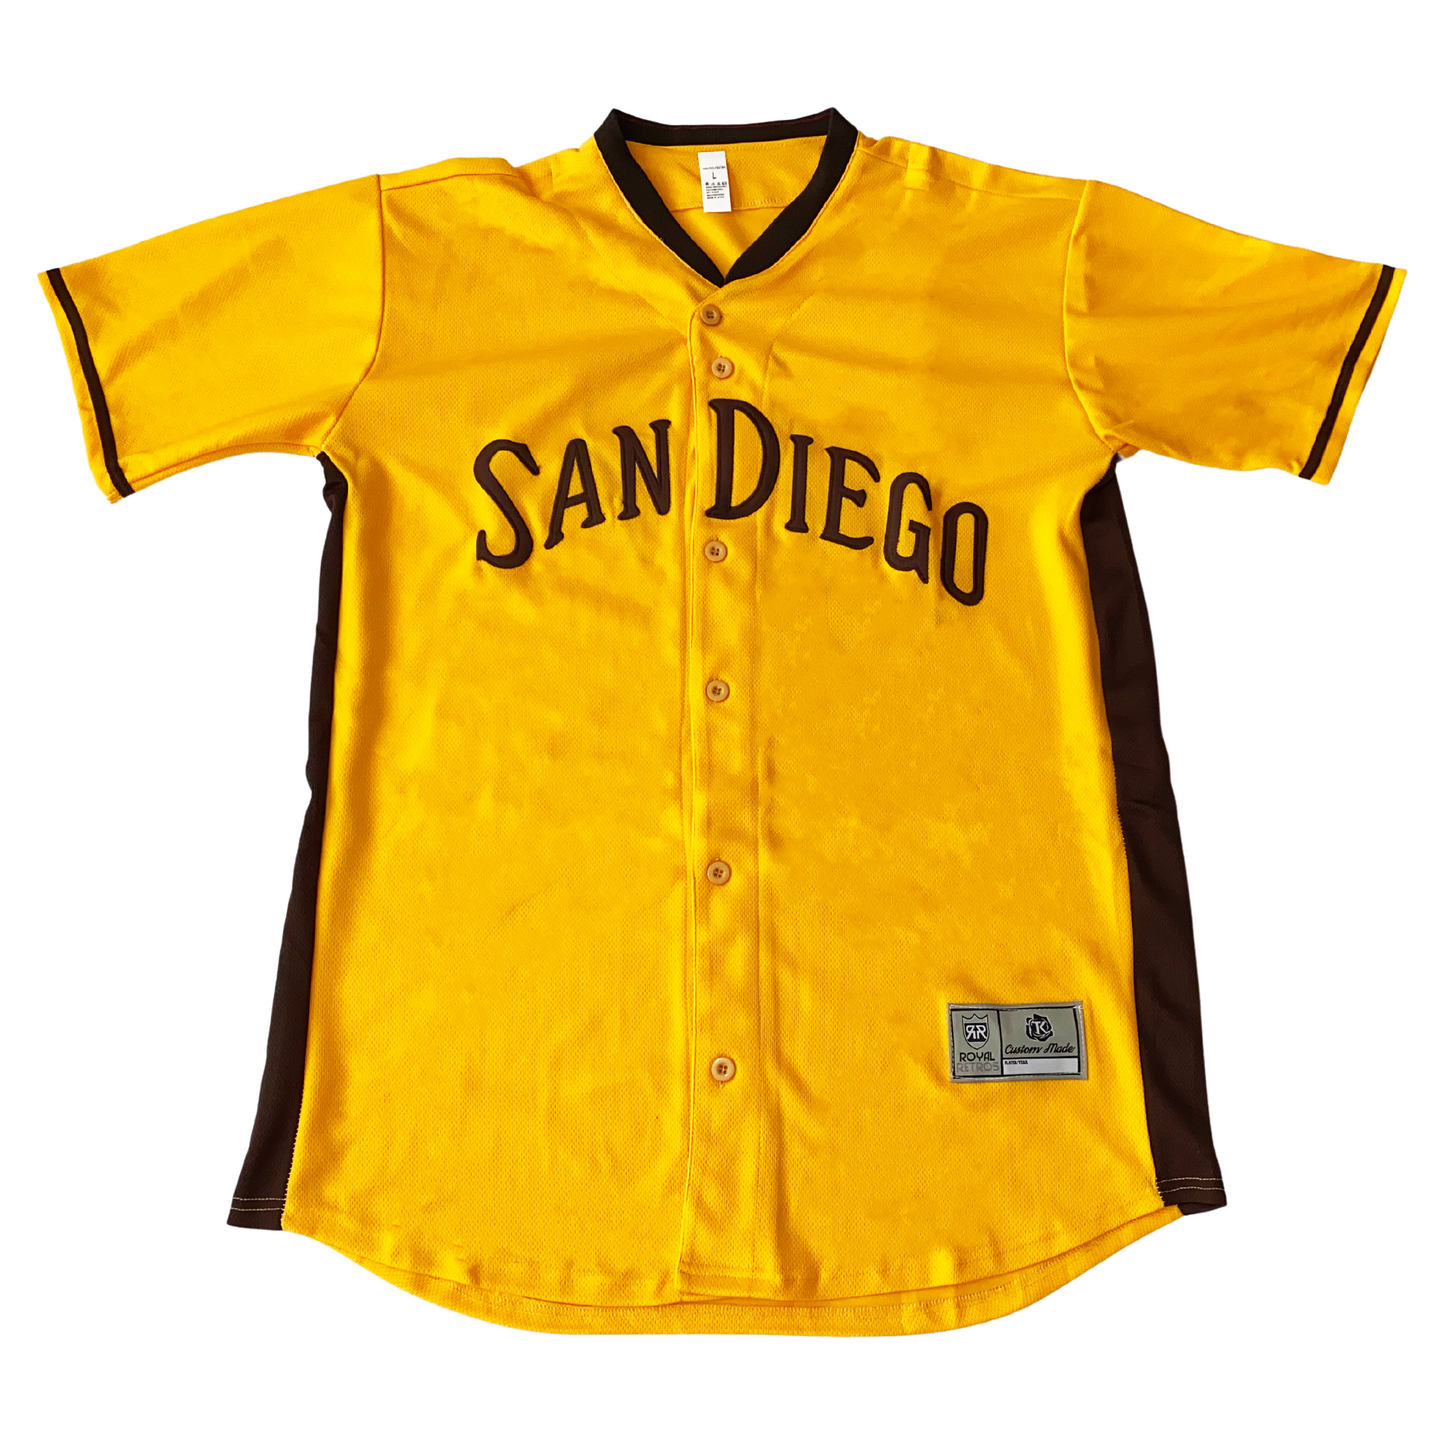 San Diego Baseball Jersey